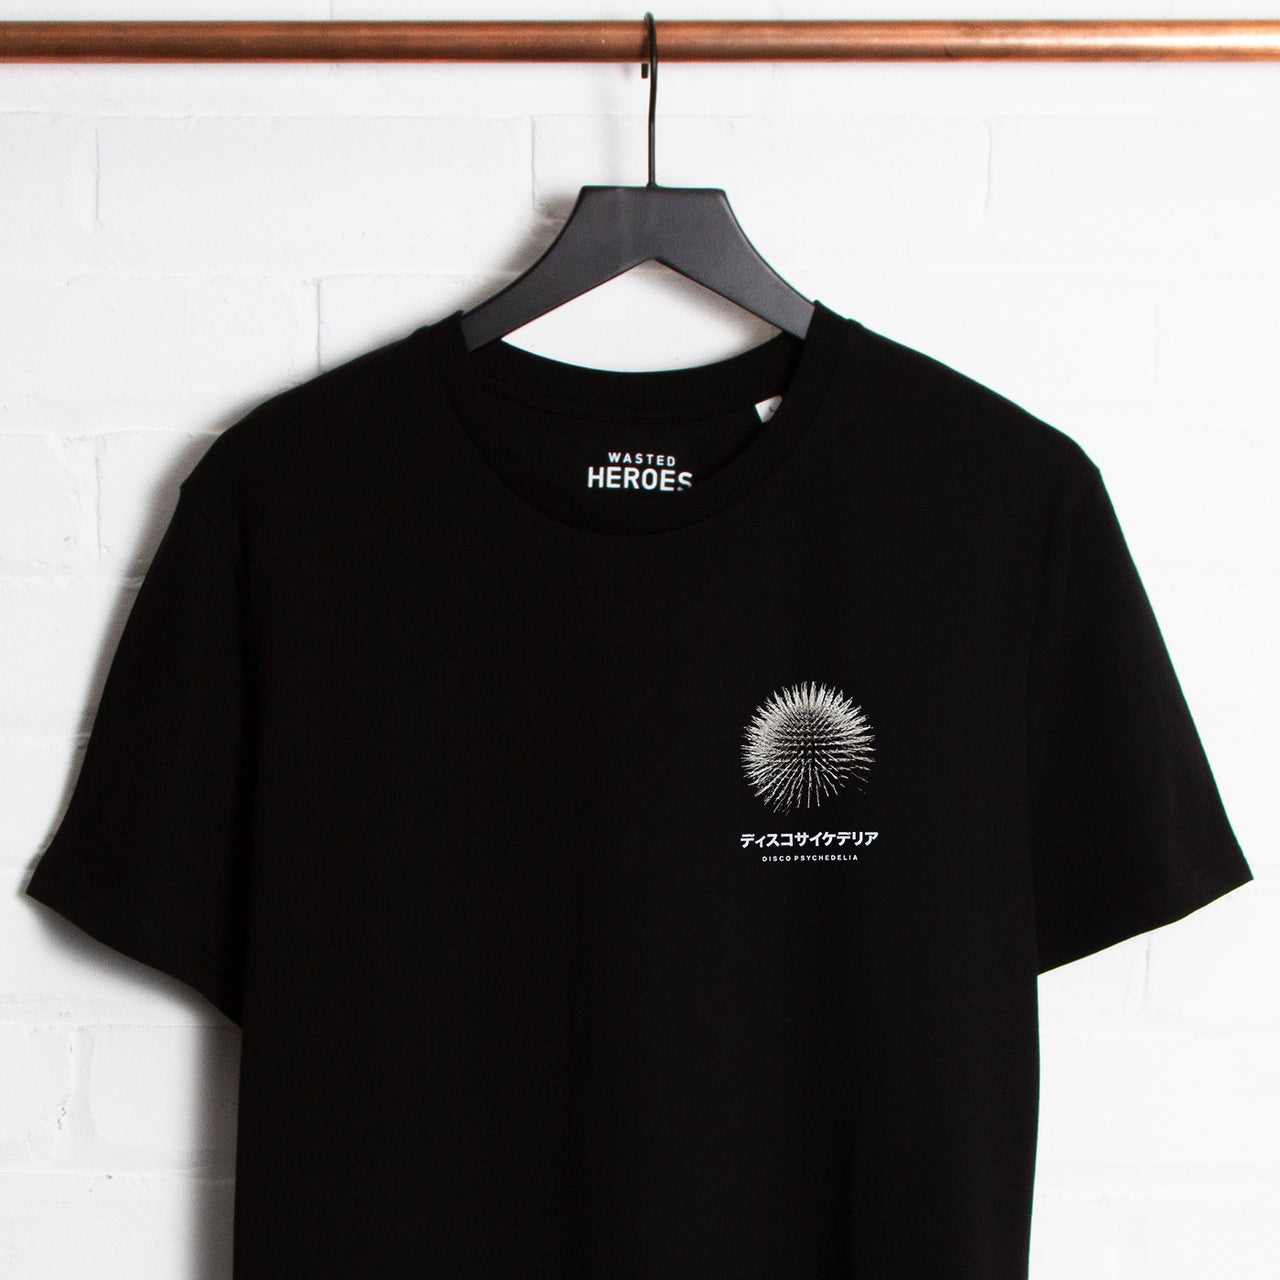 Crest Orb 003 - Tshirt - Black